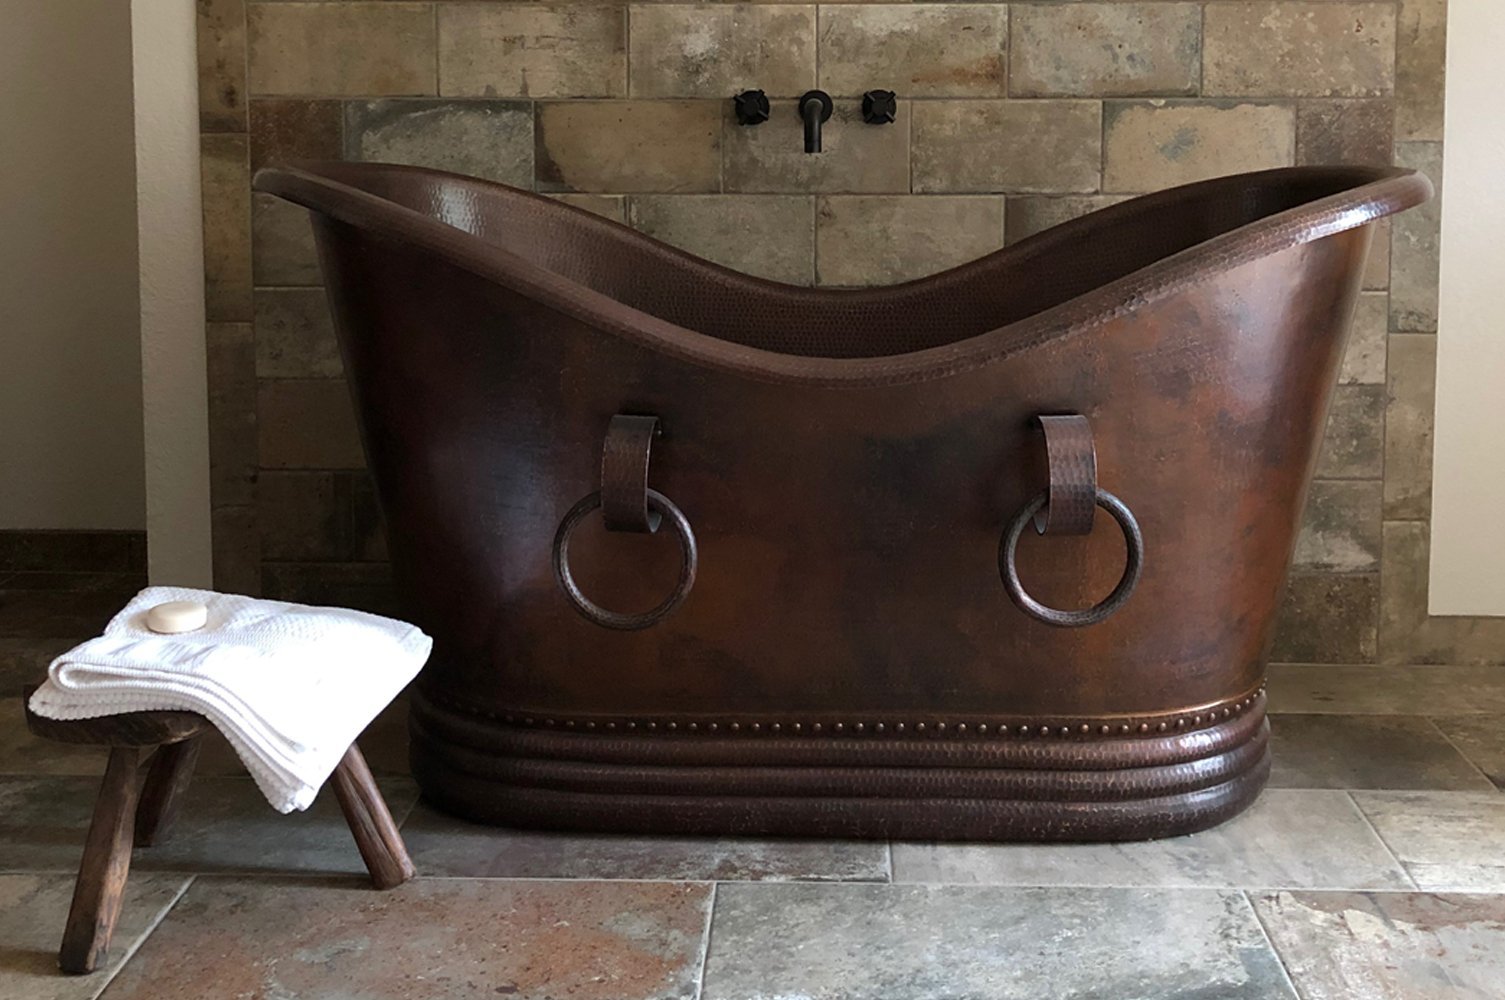 60" Hammered Copper Double Slipper Bathtub With Rings (BTDR60DB) - Rustic Kitchen & Bath - Bathtubs - Premier Copper Products